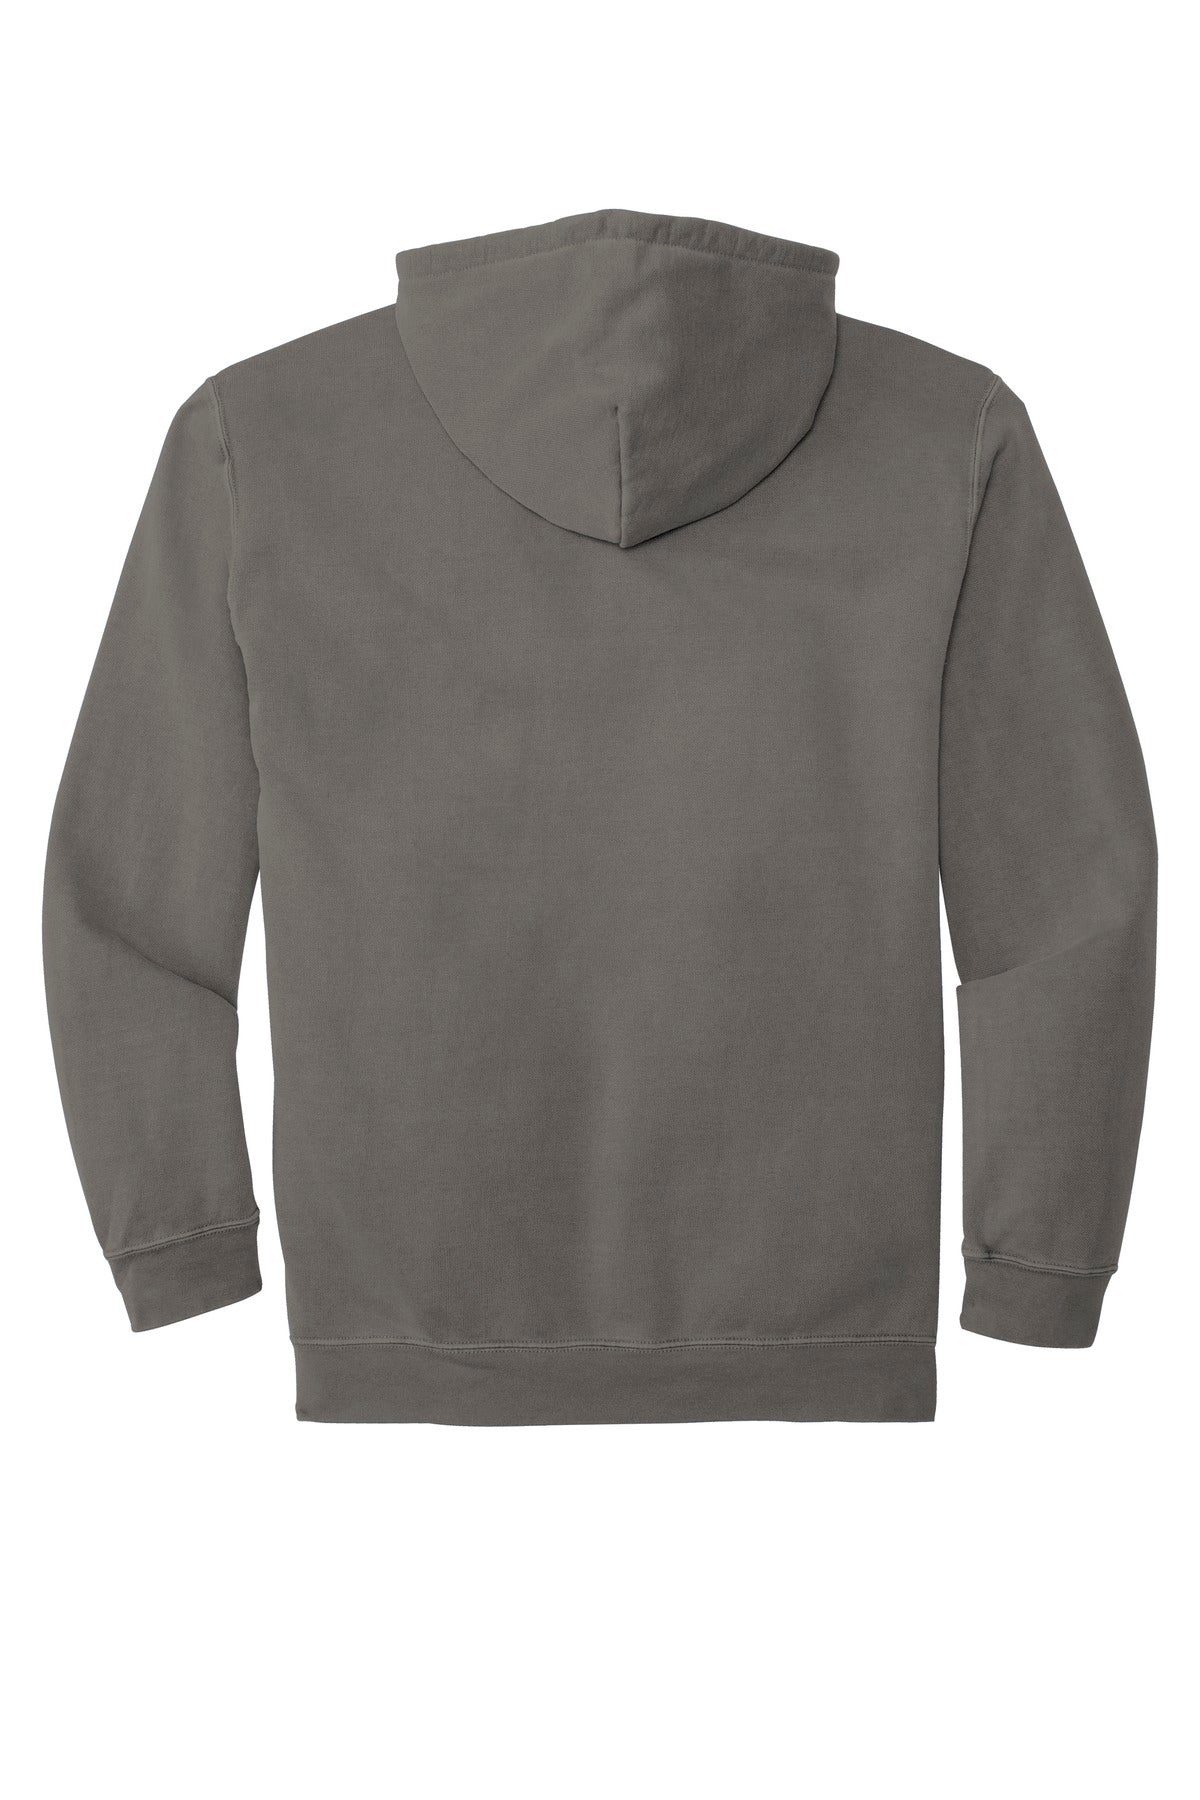 COMFORT COLORS Ring Spun Hooded Sweatshirt. 1567 - BT Imprintables Shirts